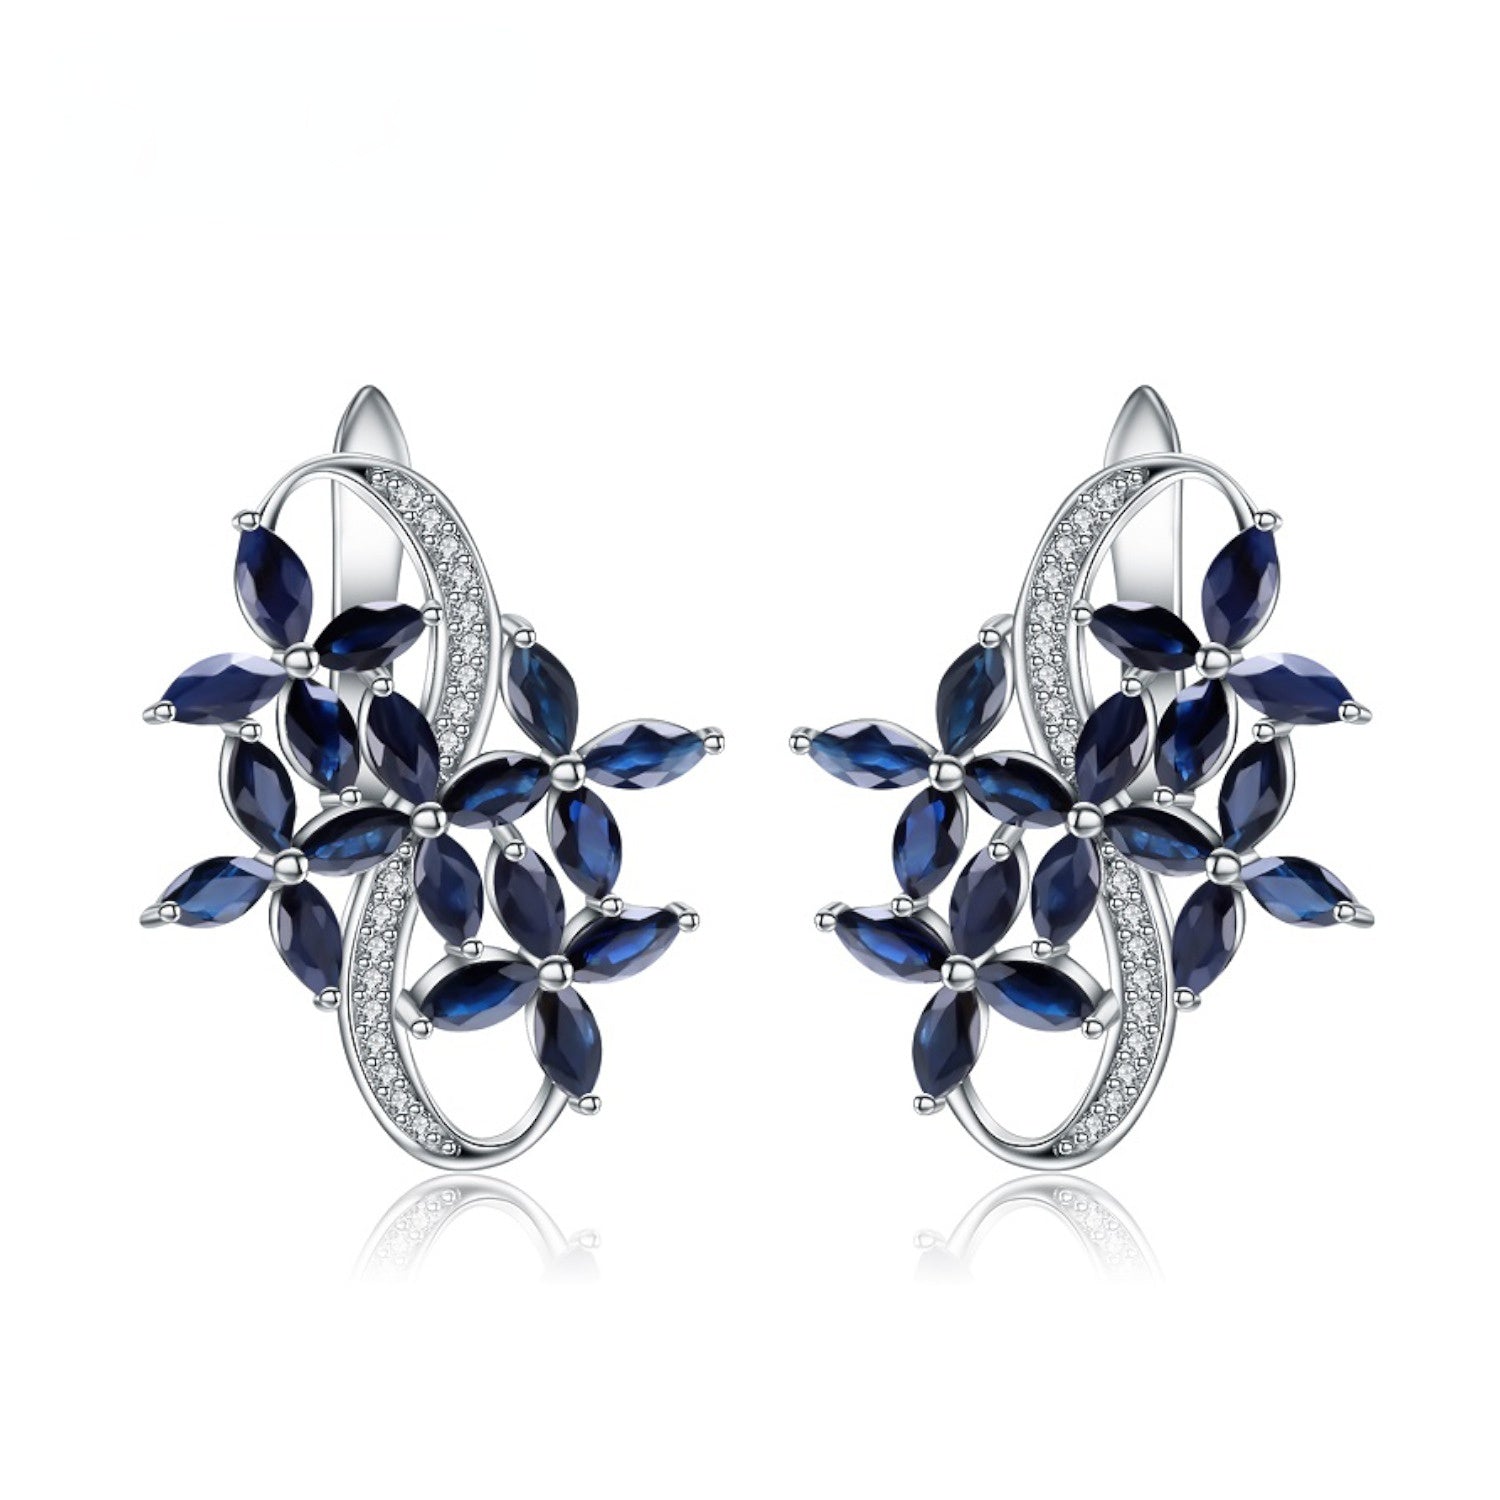 European Inlaid Crystal Flowers Silver Studs Earrings for Women